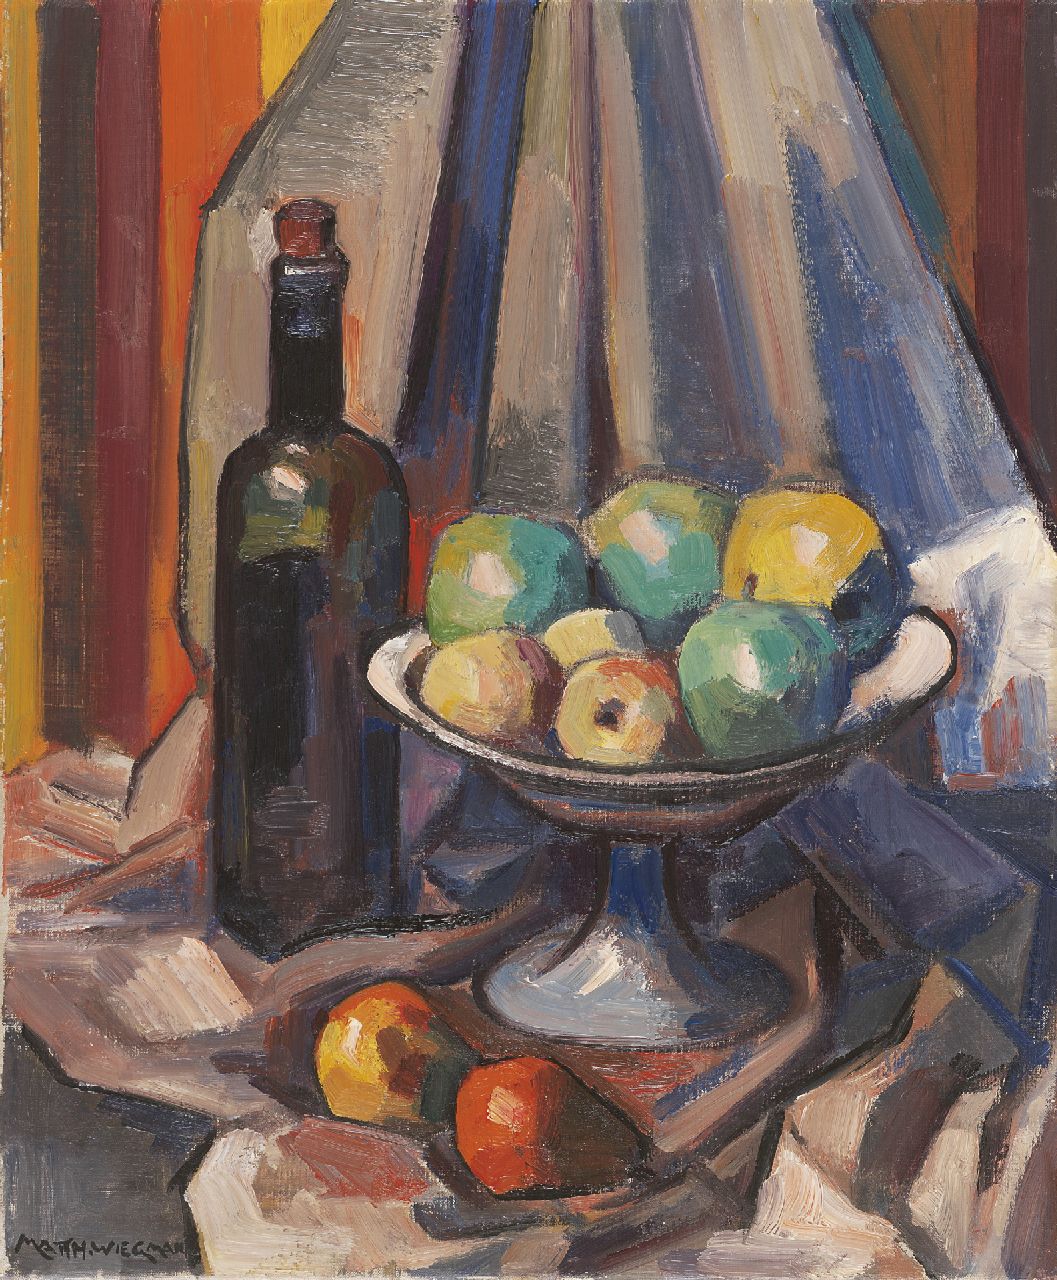 Wiegman M.J.M.  | Mattheus Johannes Marie 'Matthieu' Wiegman, Stilleven met fruitschaal en fles, olieverf op doek 46,0 x 38,2 cm, gesigneerd linksonder